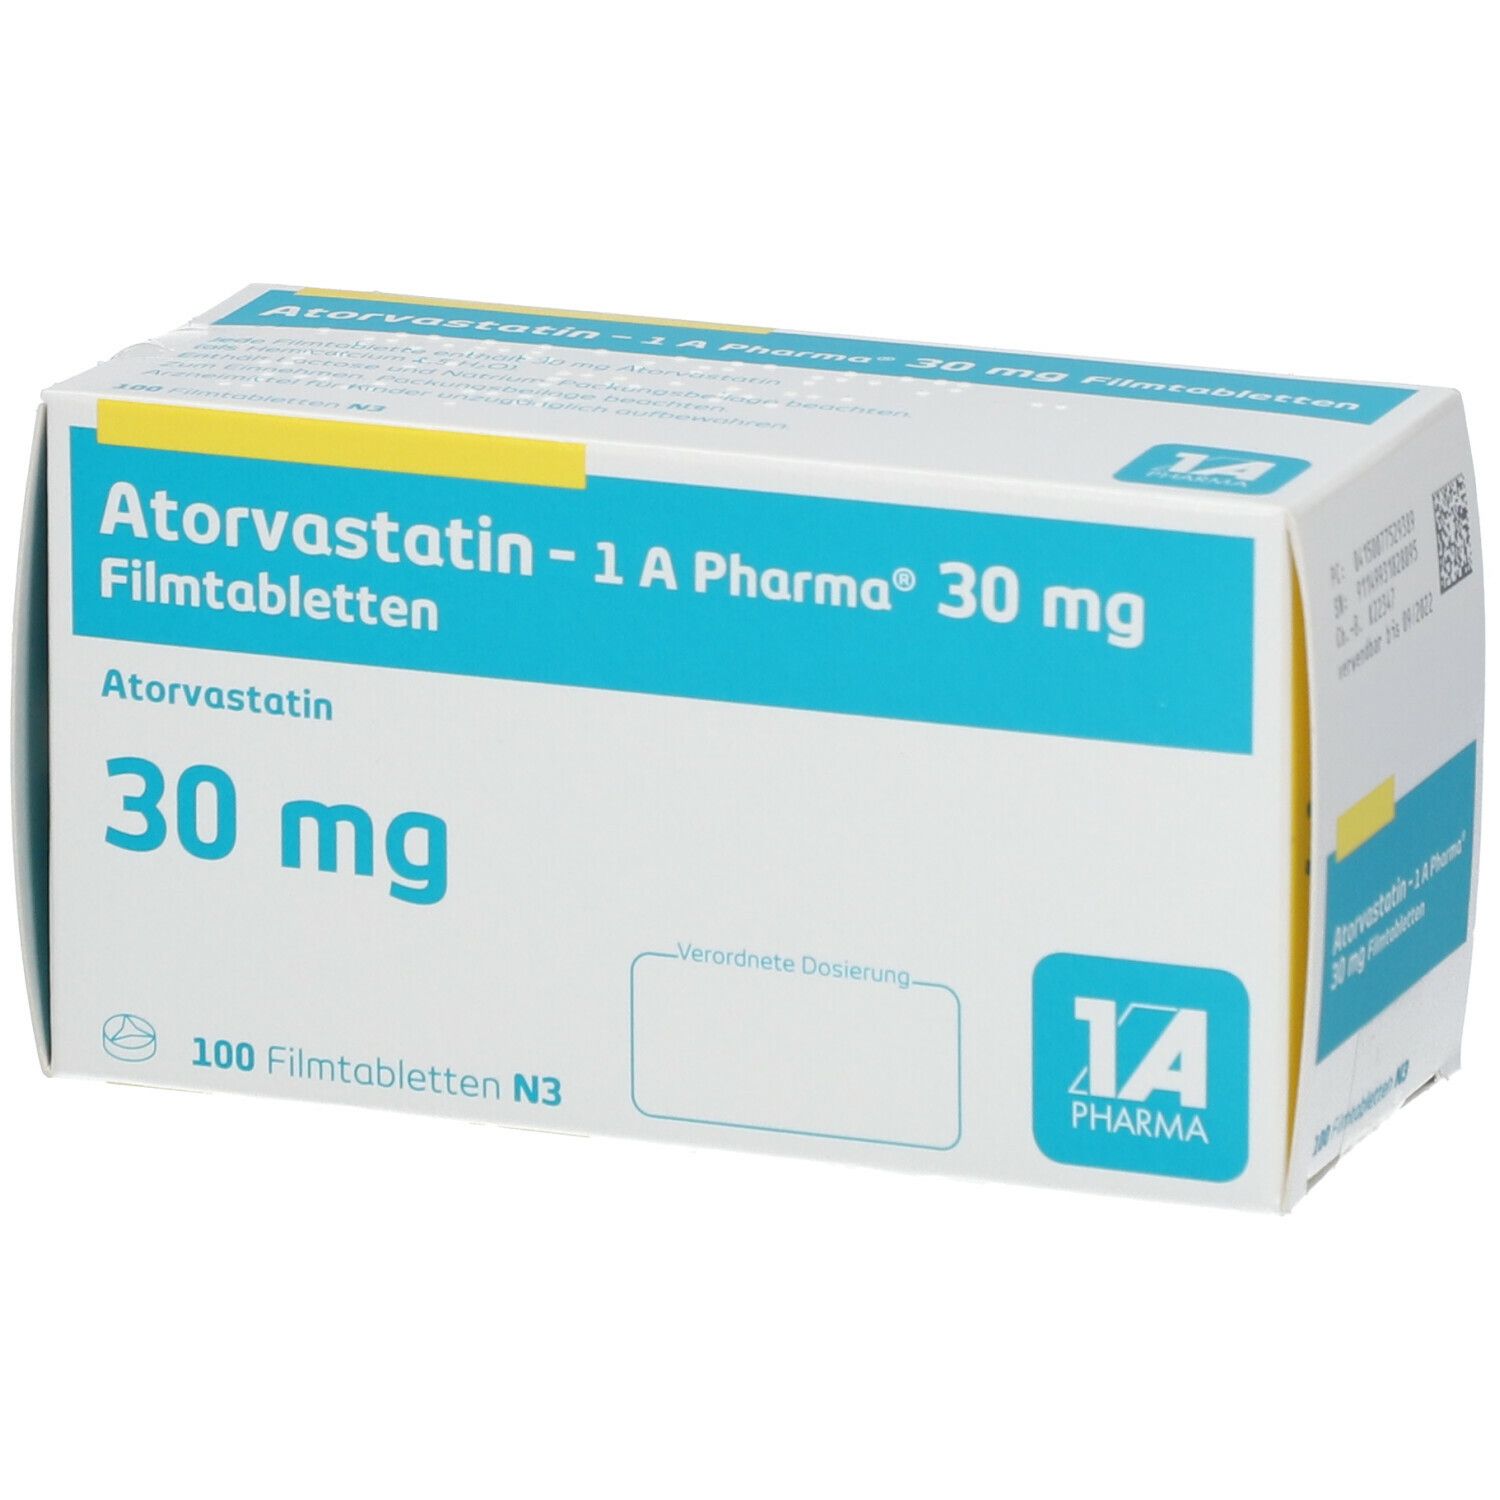 Atorvastatin - 1 A Pharma® 30 mg